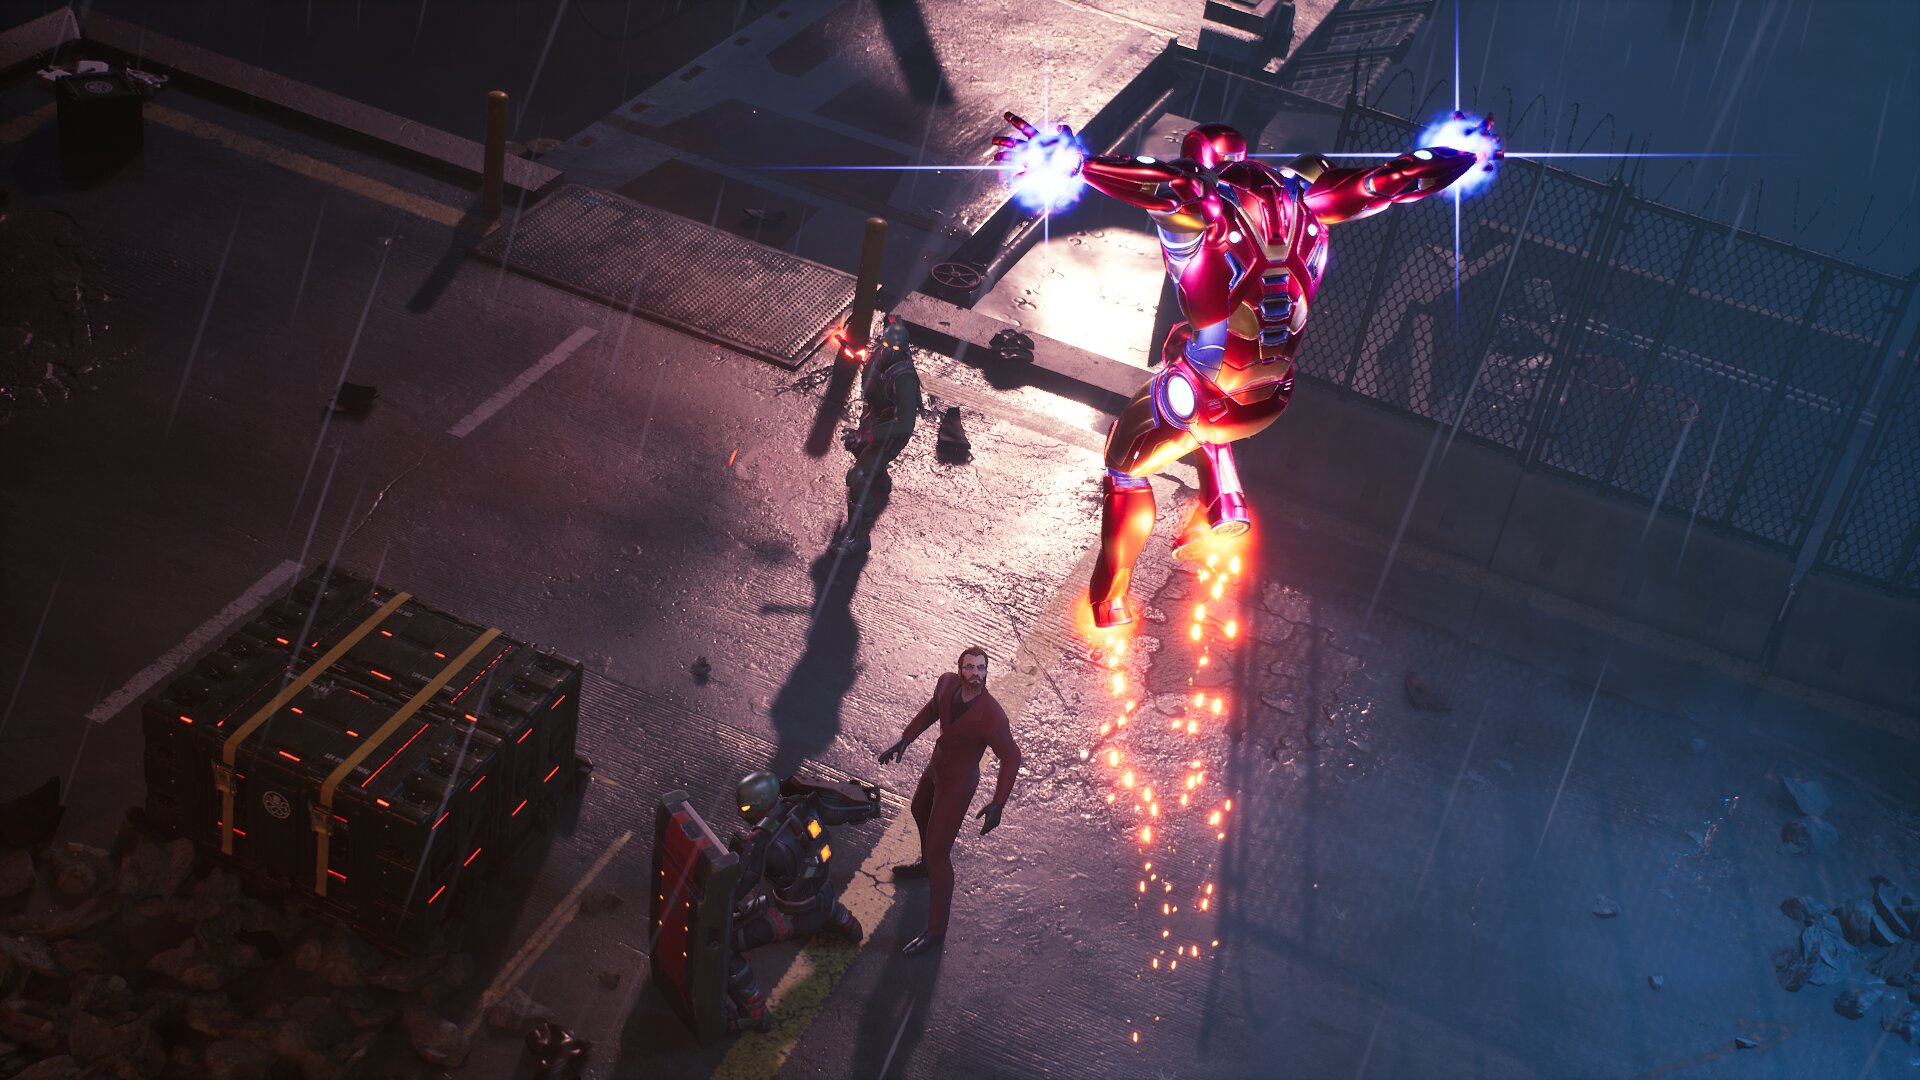 Iron Man fights Hydra in Midnight Suns